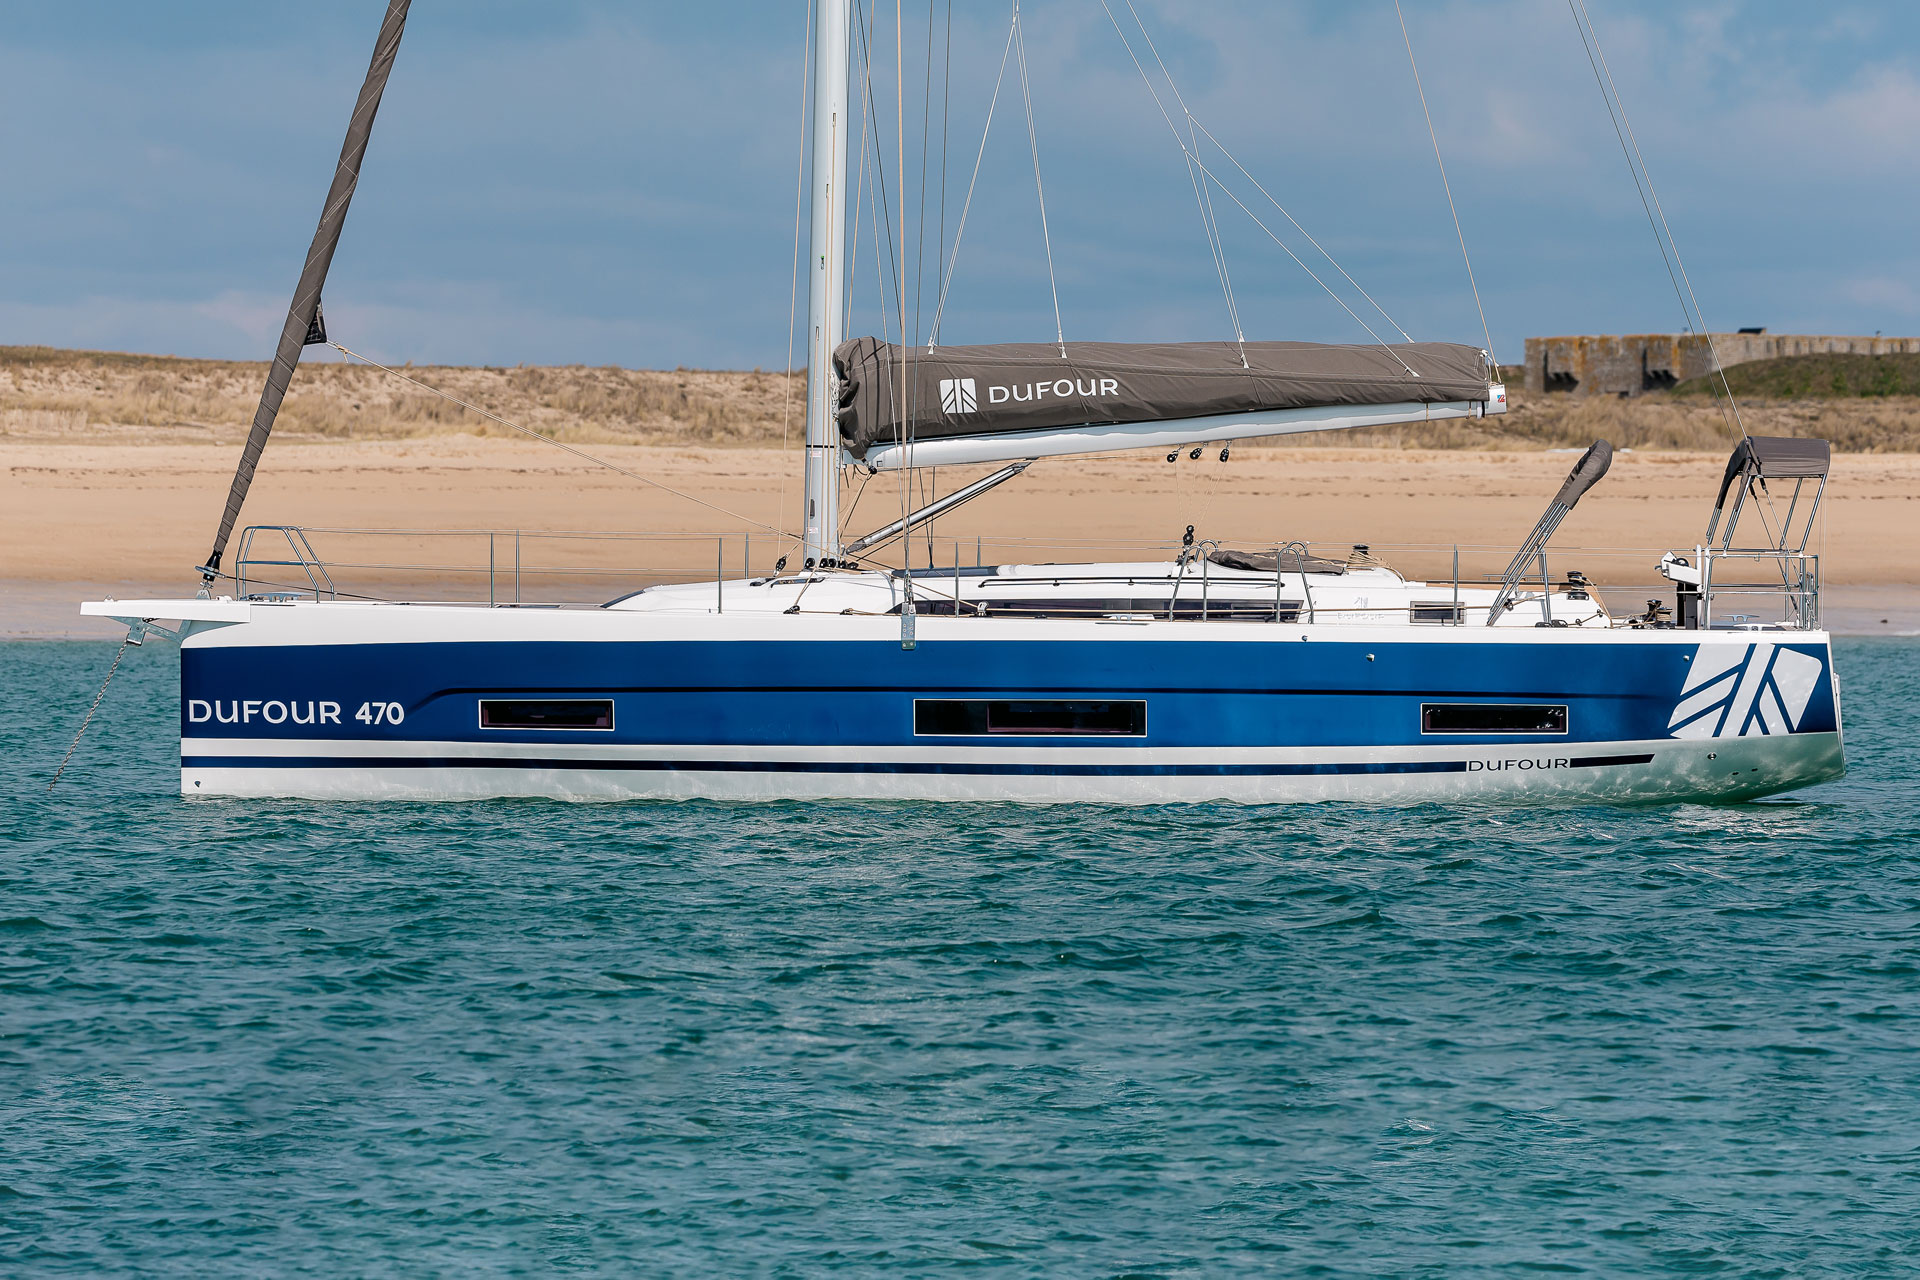 Blue-Mermaid-Dufour-470-Grand-Large-GL-Luxury-Bareboat-Skippered-Yachting-Sailing-Catamaran-Yacht-Charter-Rental-Greece 2